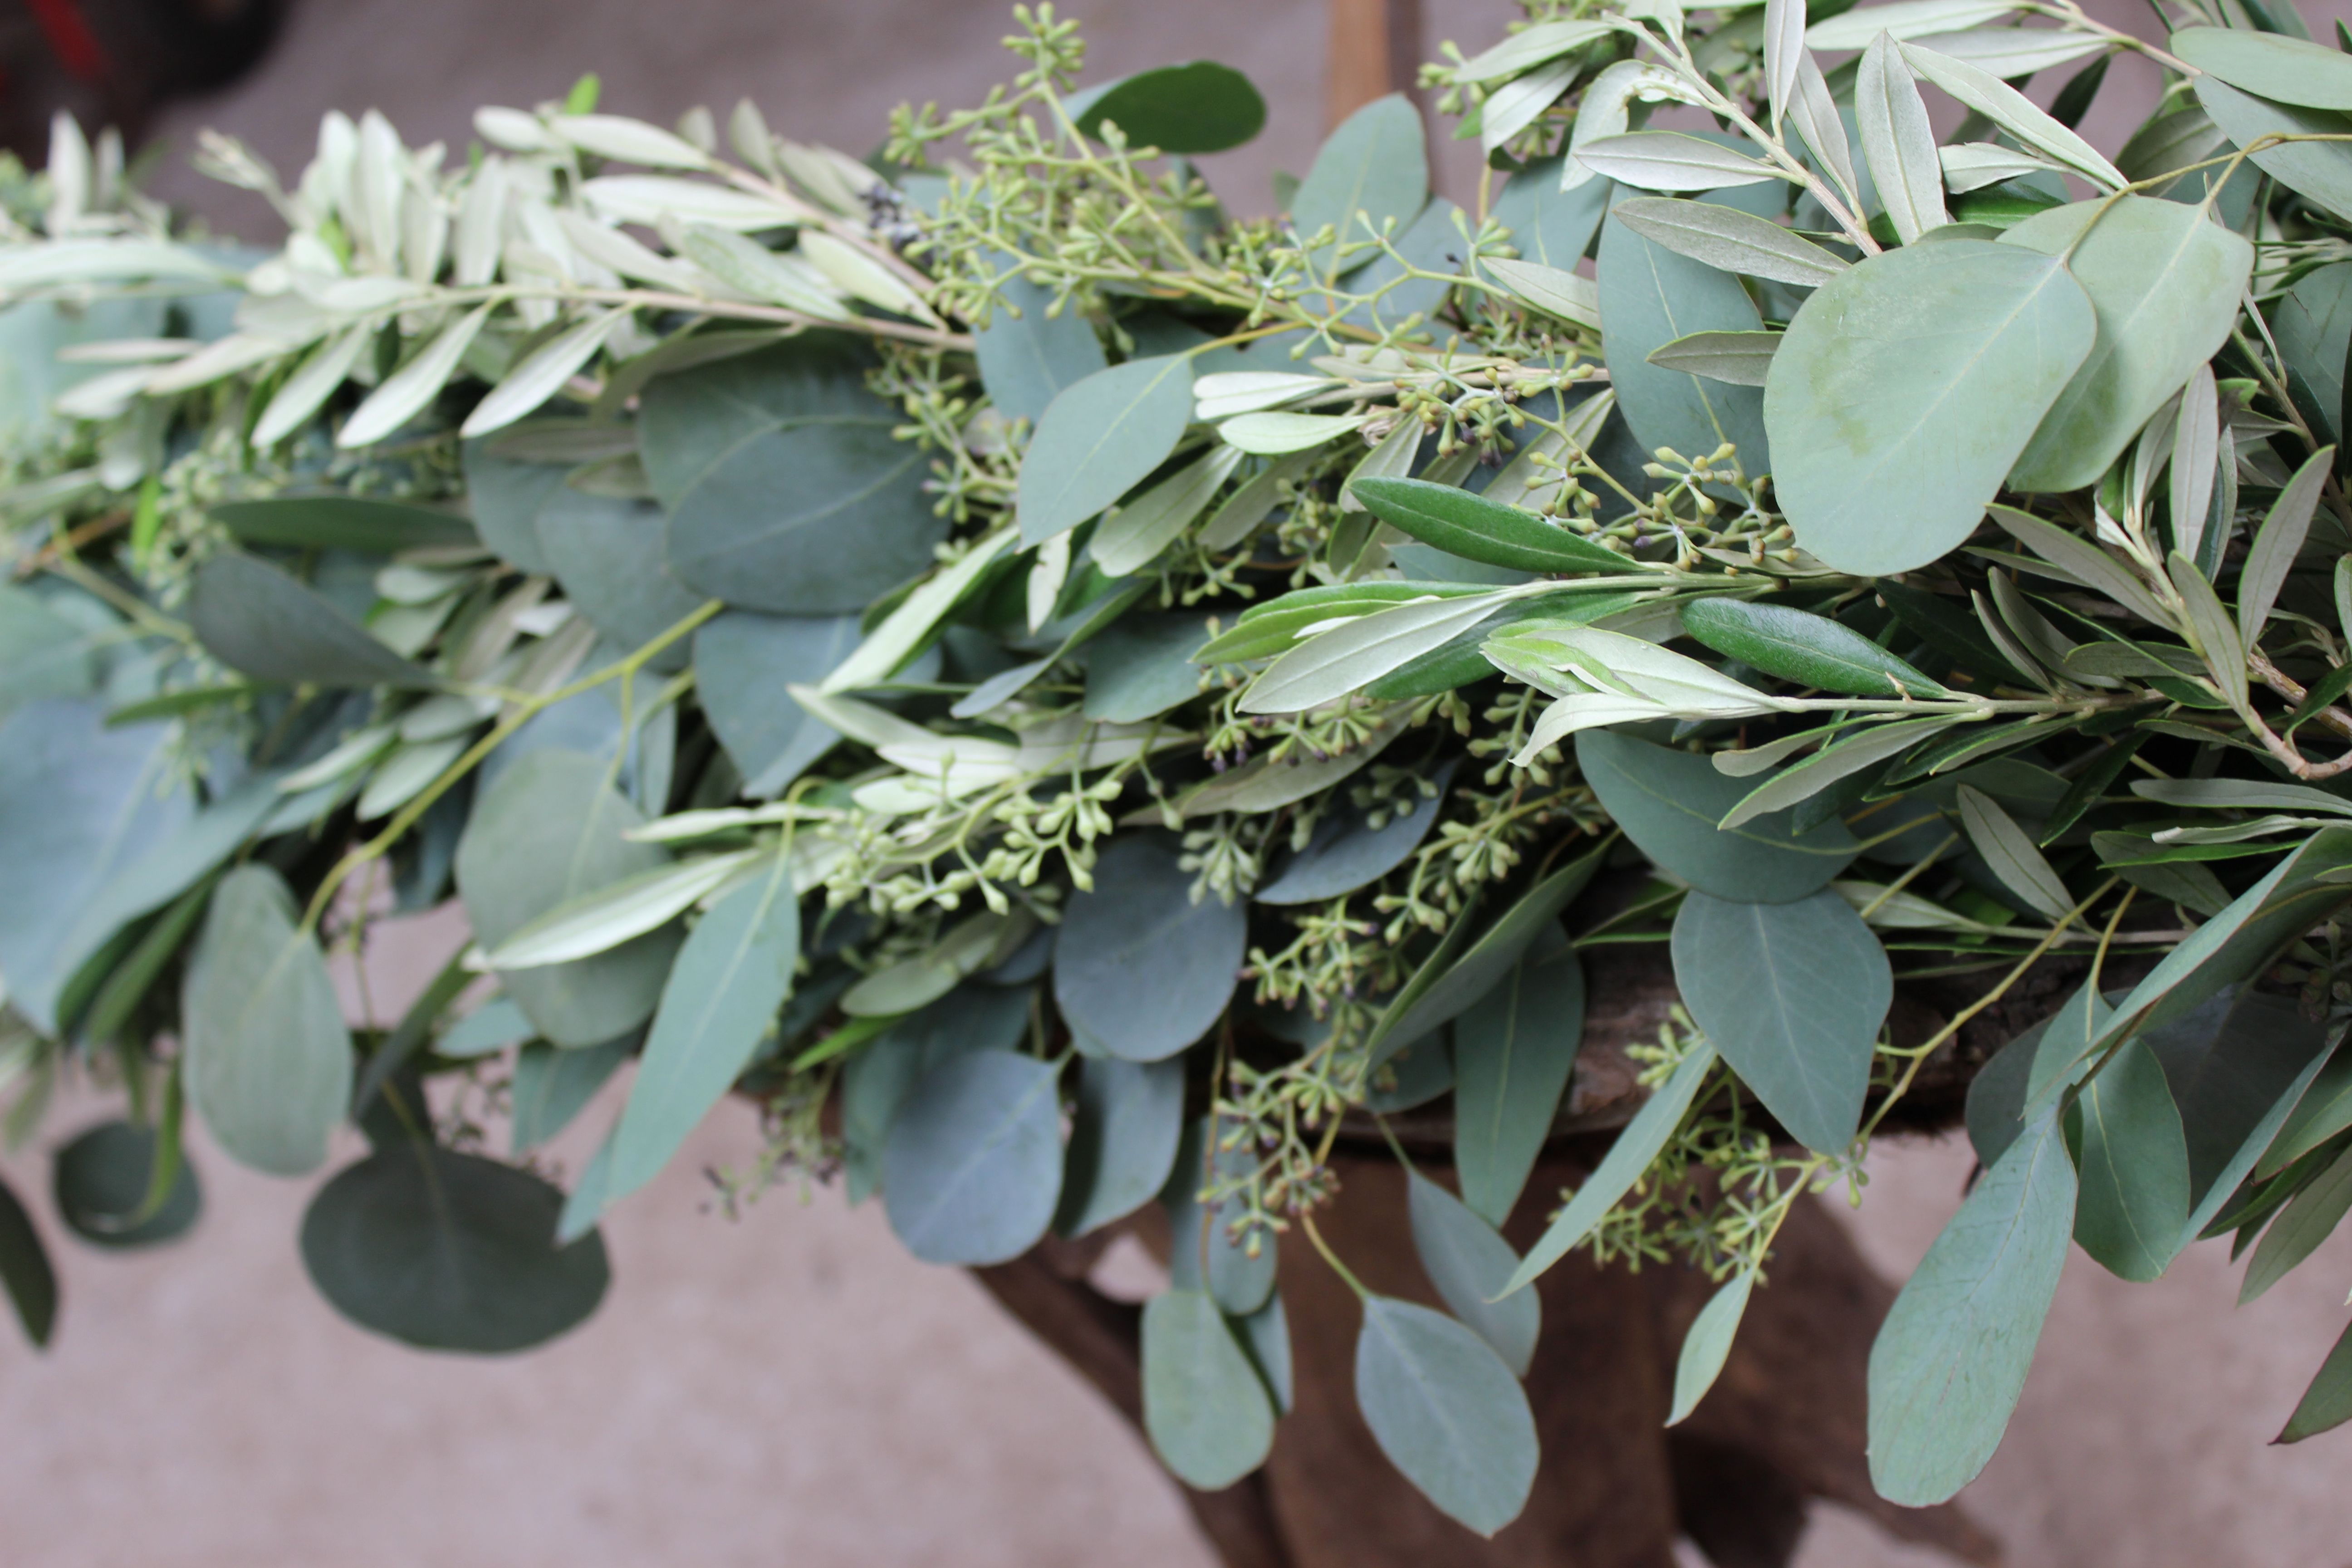 Tree Fern and Silver Dollar Eucalyptus Garland - Garlands - Flower